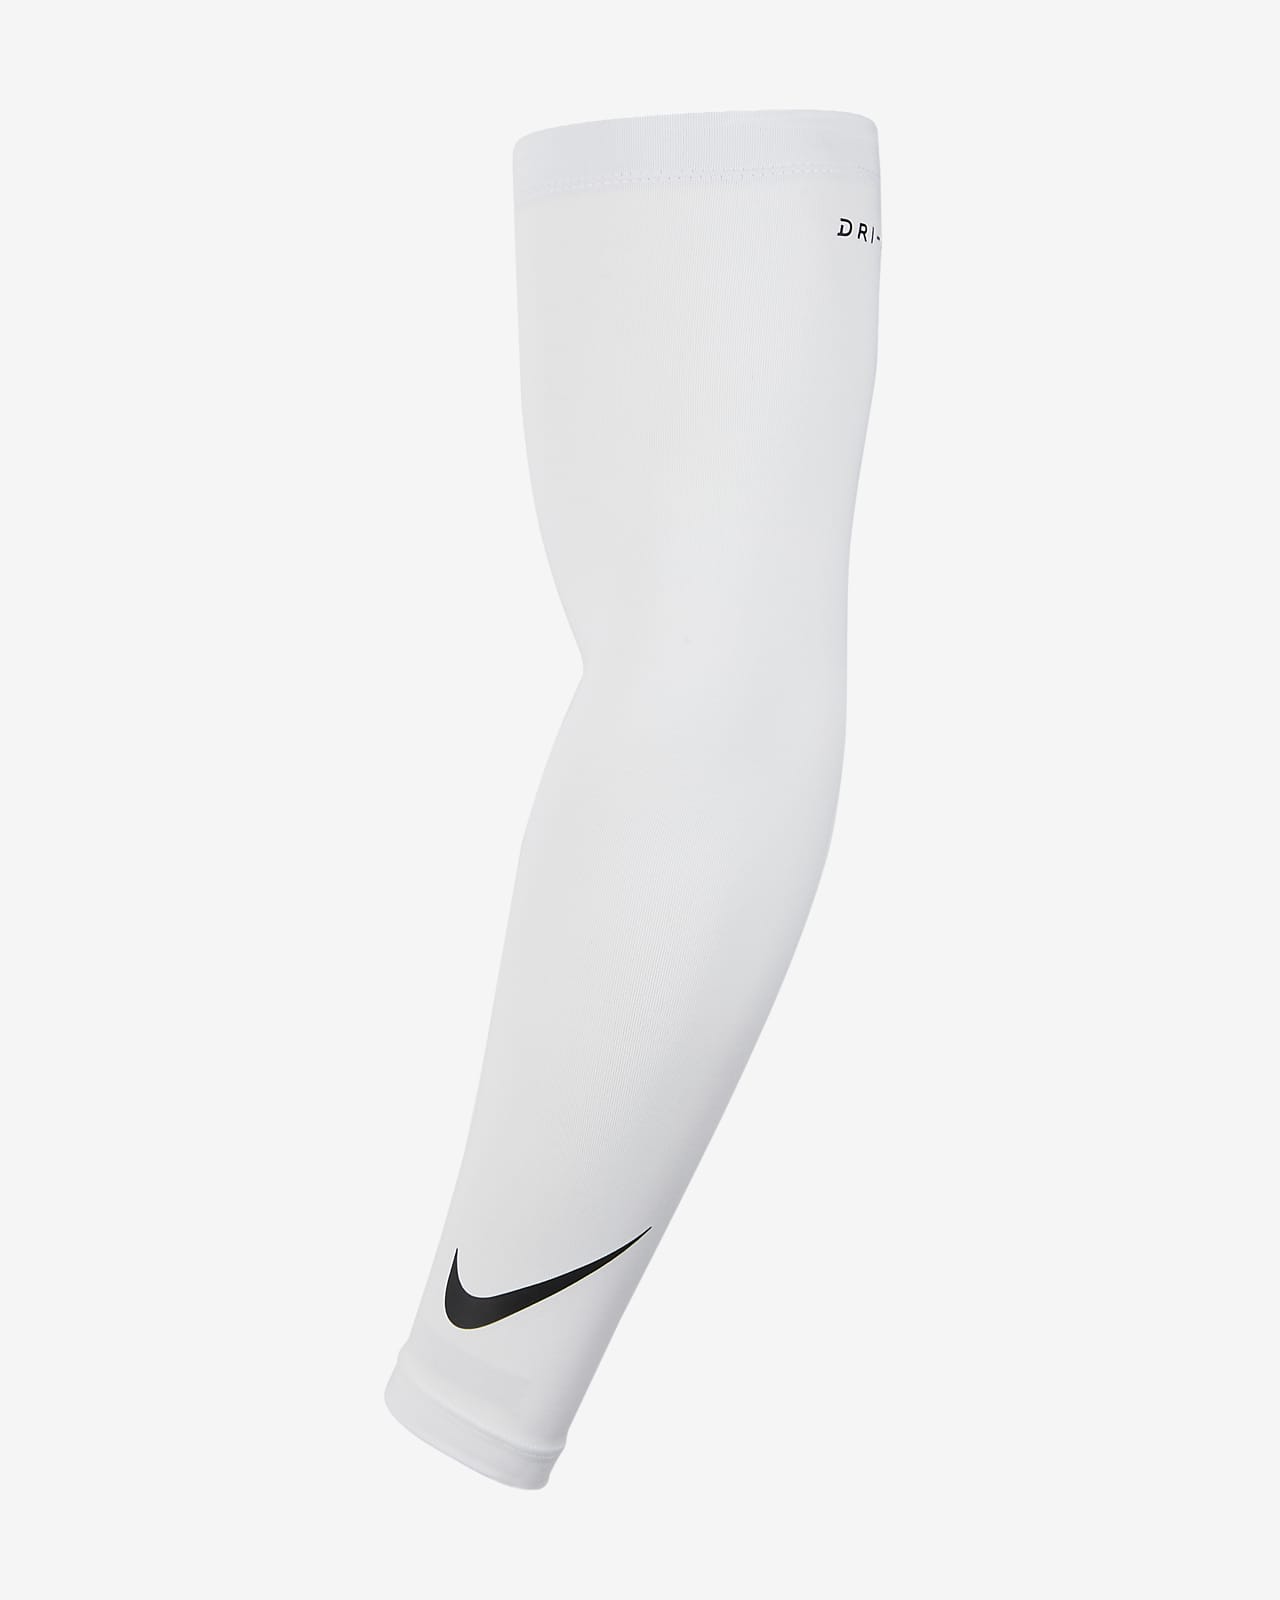 Nike Solar Golf Sleeves